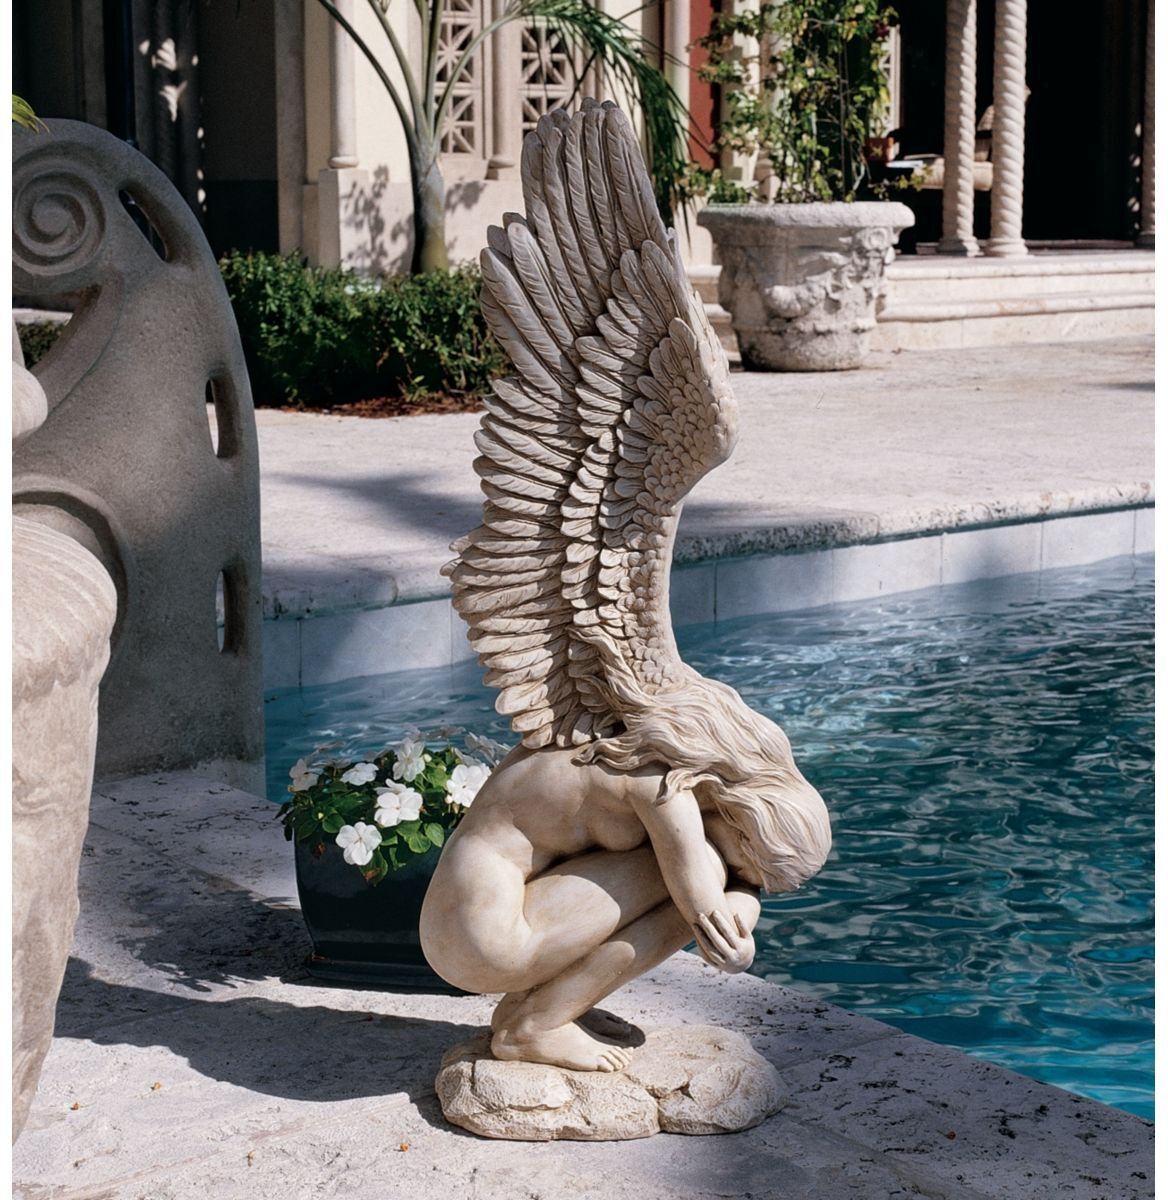 Medium: When Angels Mourn Emotional Winged Memorial Angel Sculpture Statue